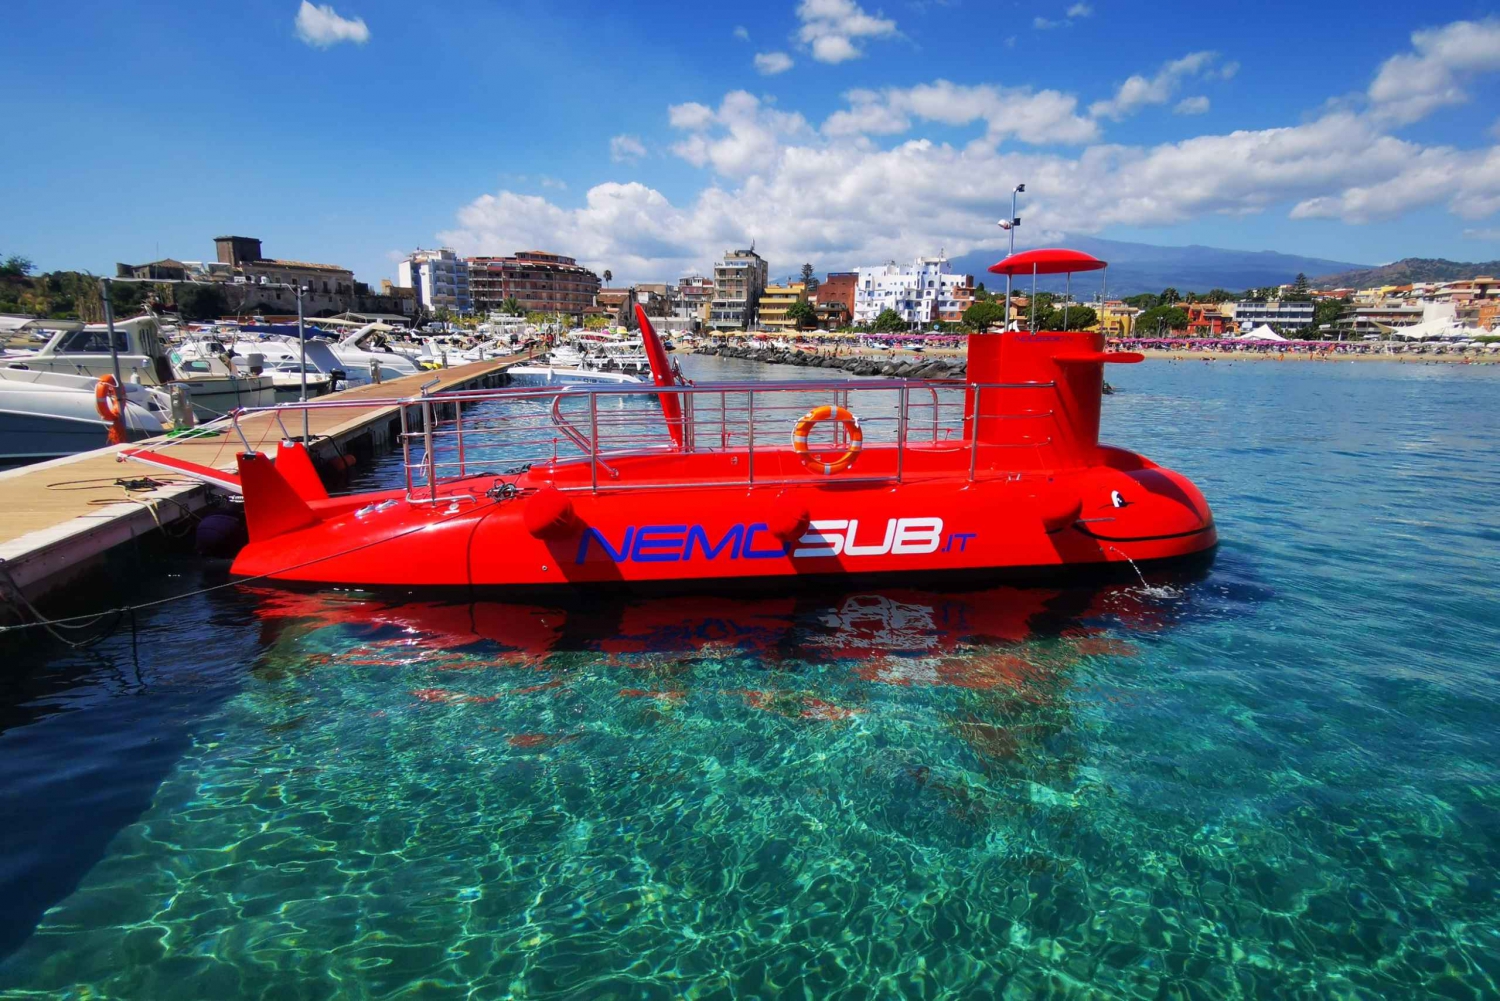 Giardini Naxos: tocht in semi-onderzeeër naar Isola Bella